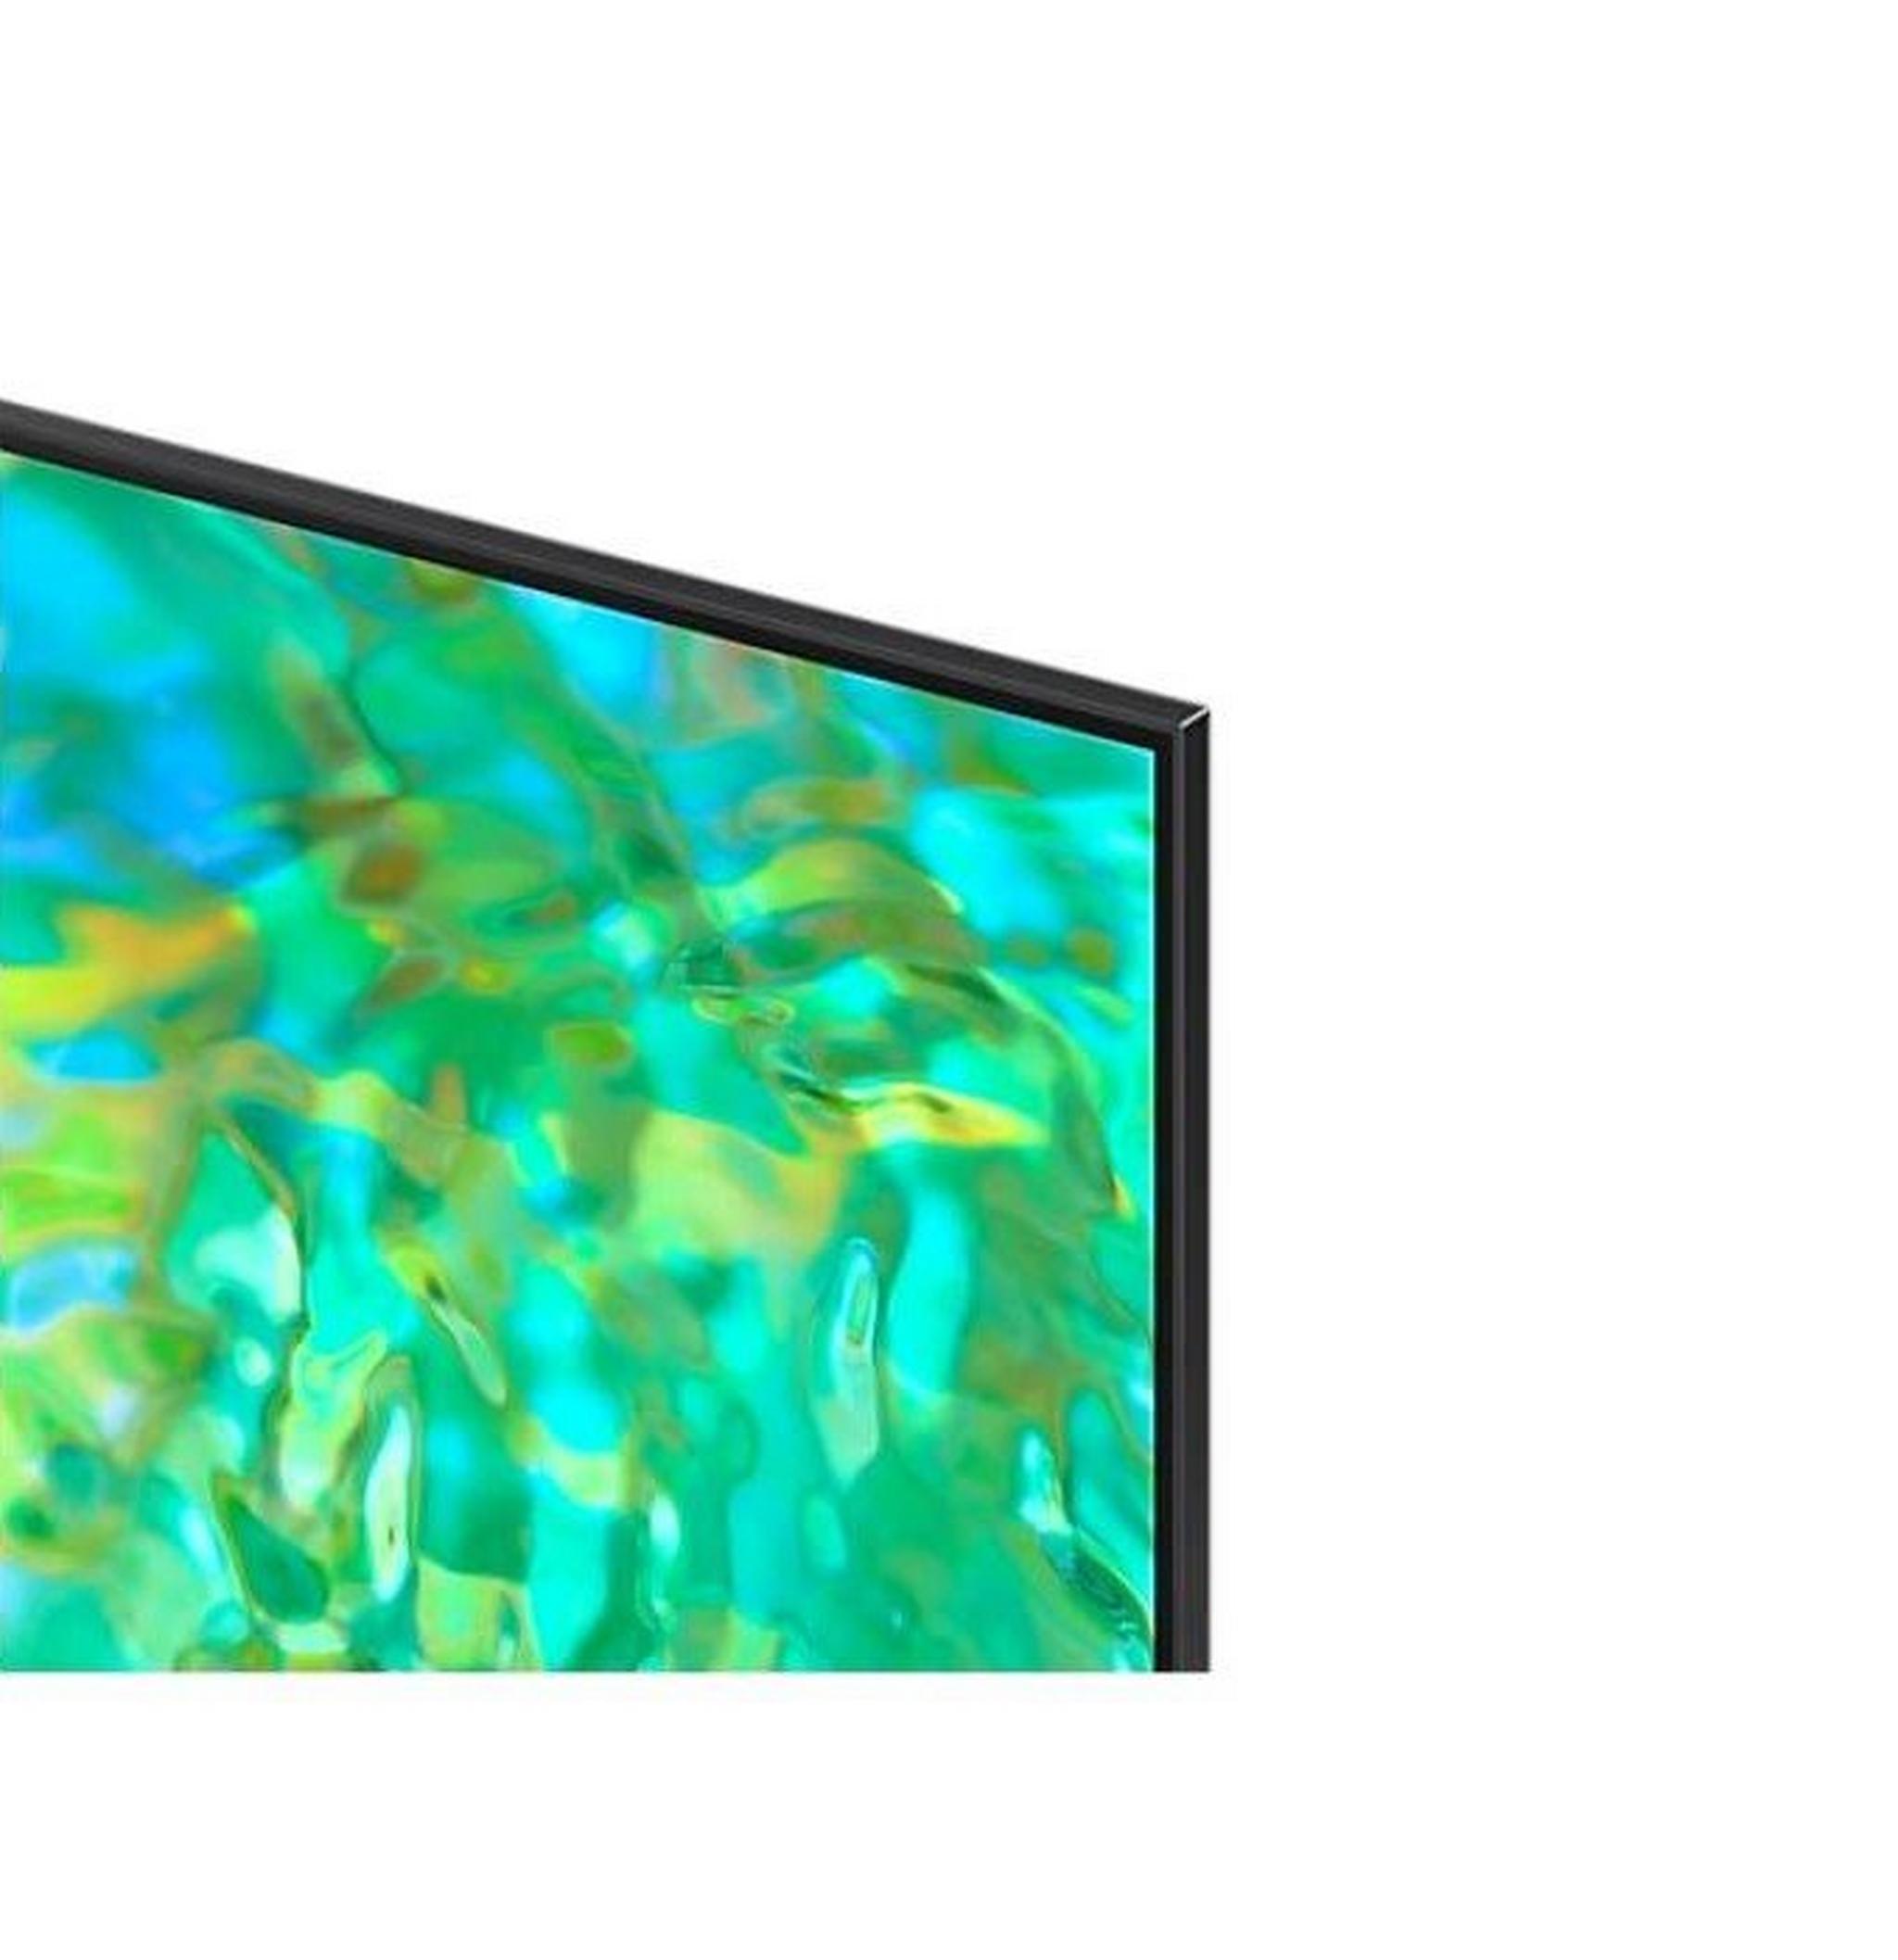 Samsung Crystal UHD 55-inch 4K LED Smart TV, UA55CU8000UXZN - Titanium Gray